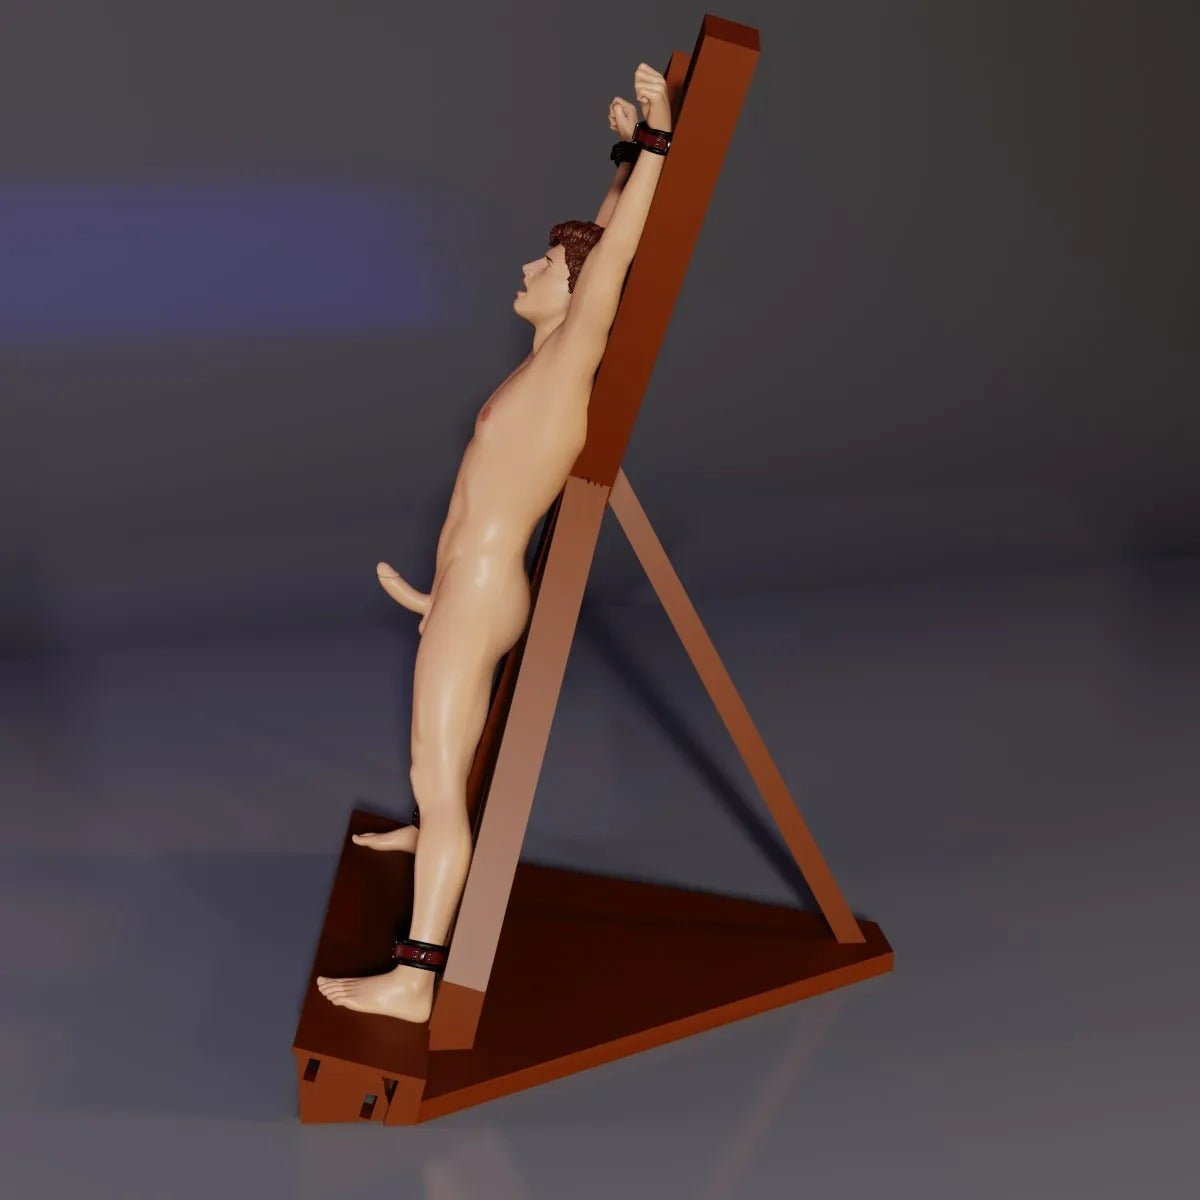 Matt Bondage Cross | 3D Printed | Fanart | Unpainted | NSFW Version | Figurine | Figure | Miniature | Sexy |